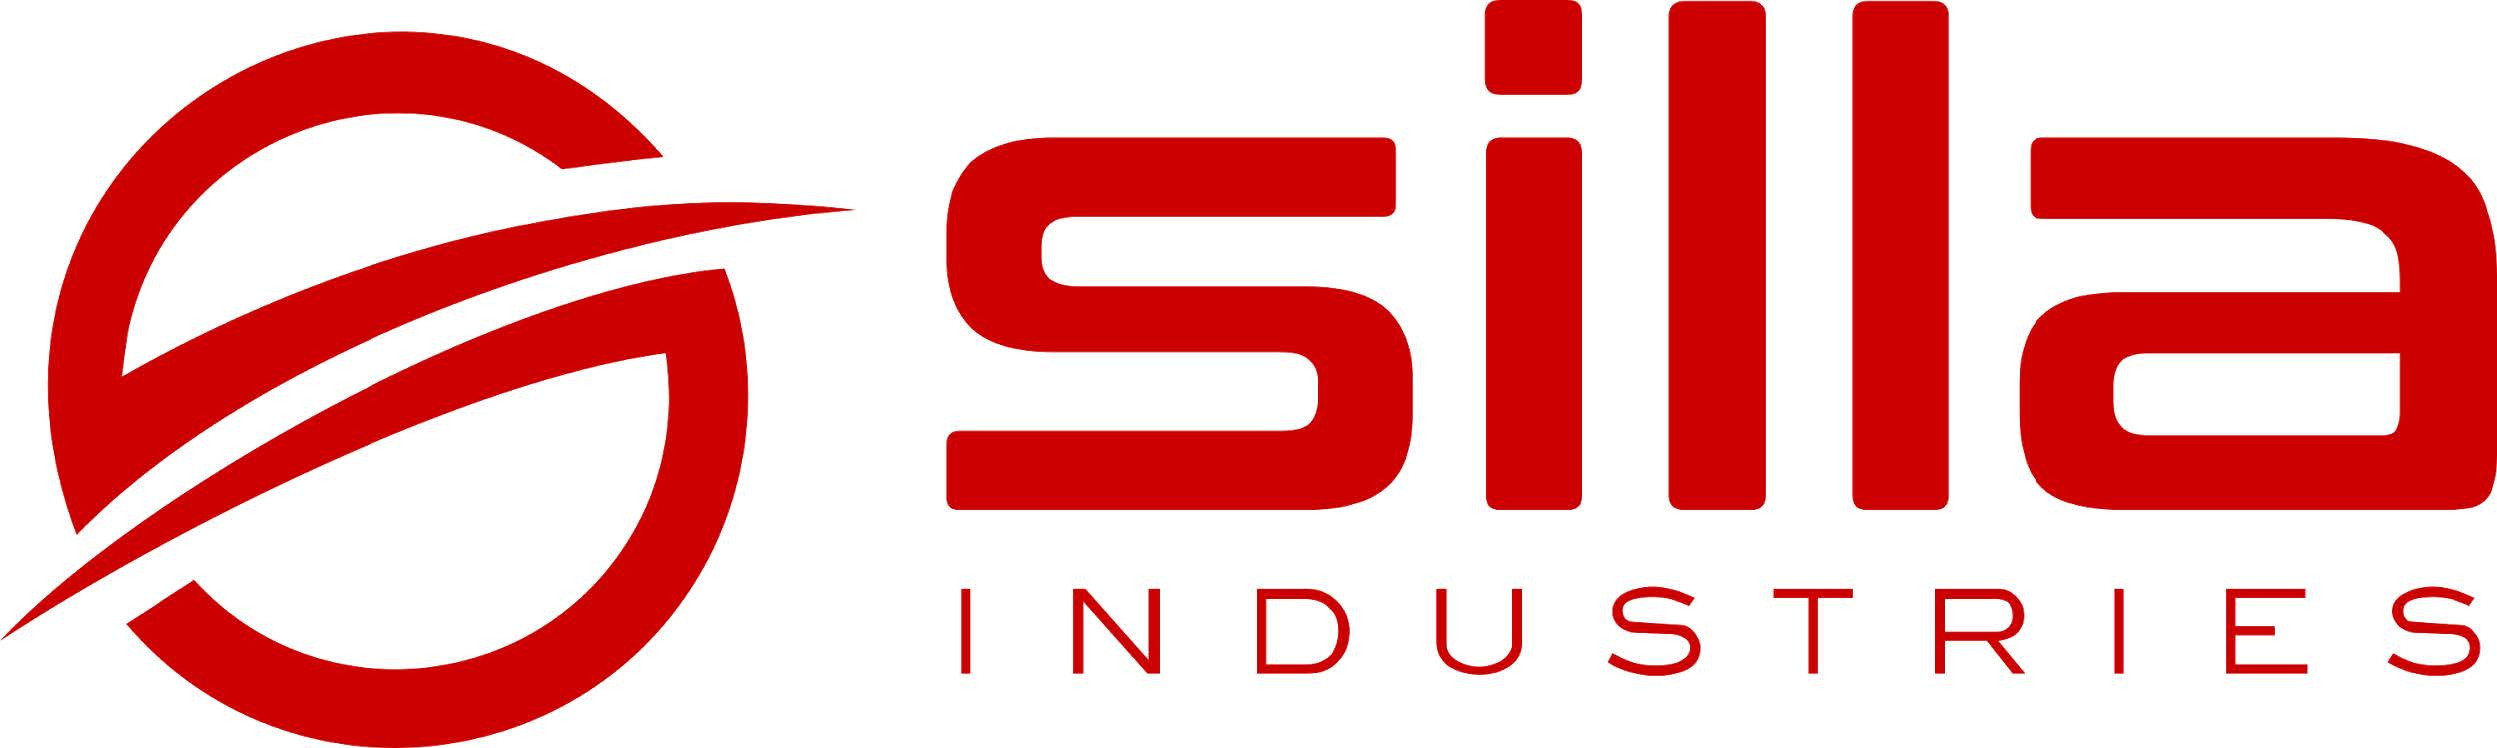 Silla Industries